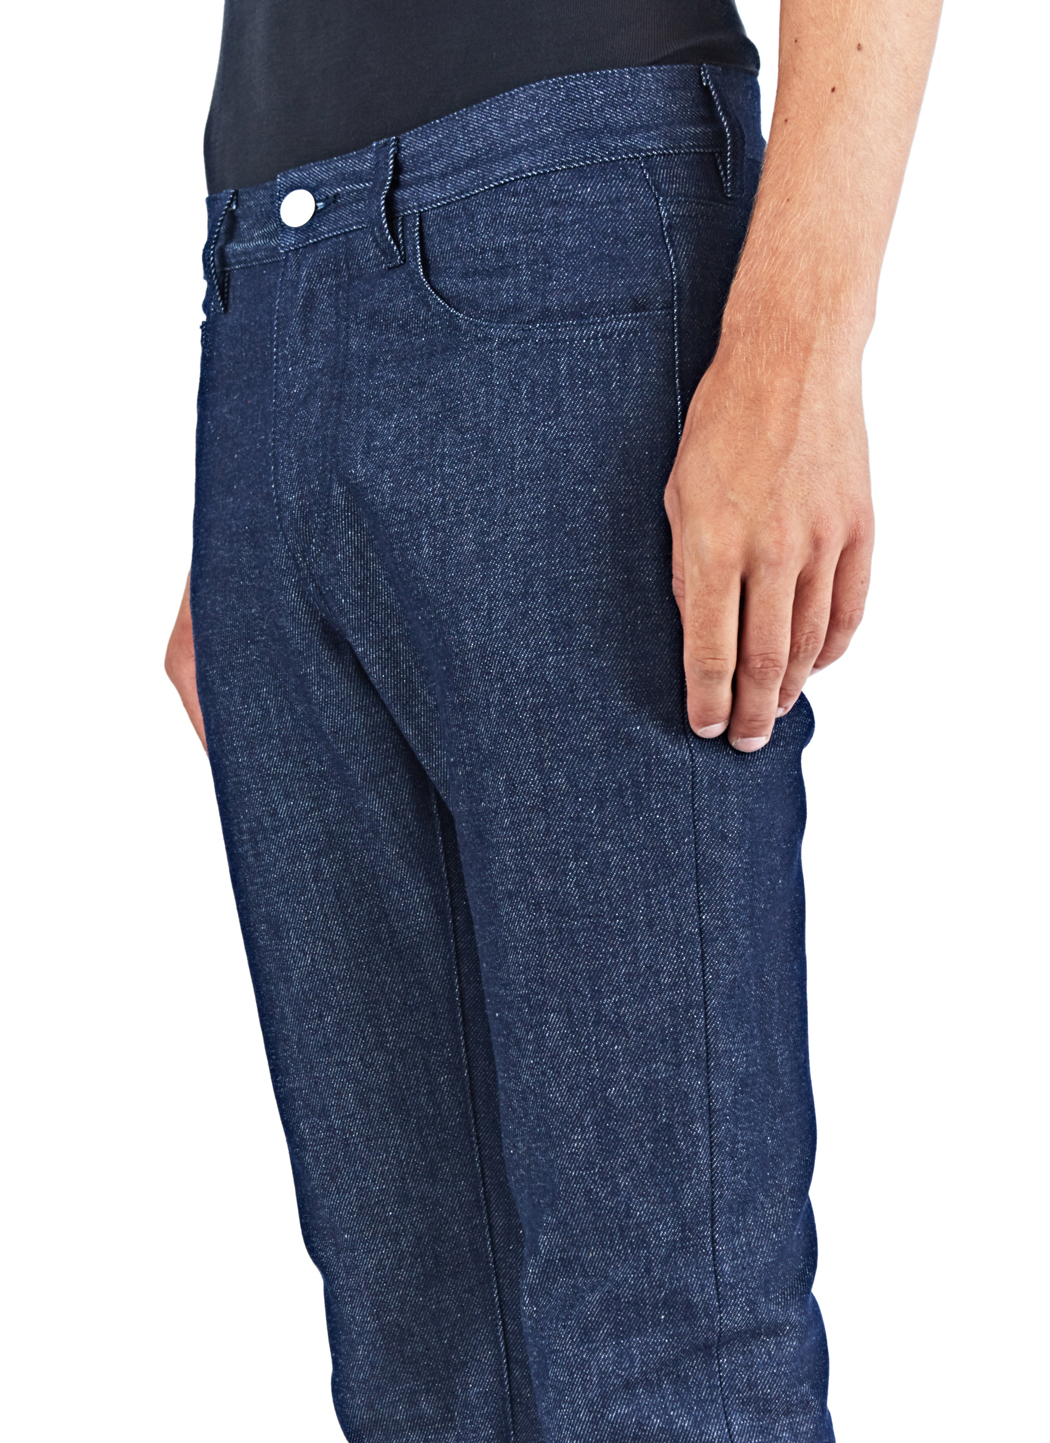 Lyst - Raf Simons Slim Fit Jeans in Blue for Men